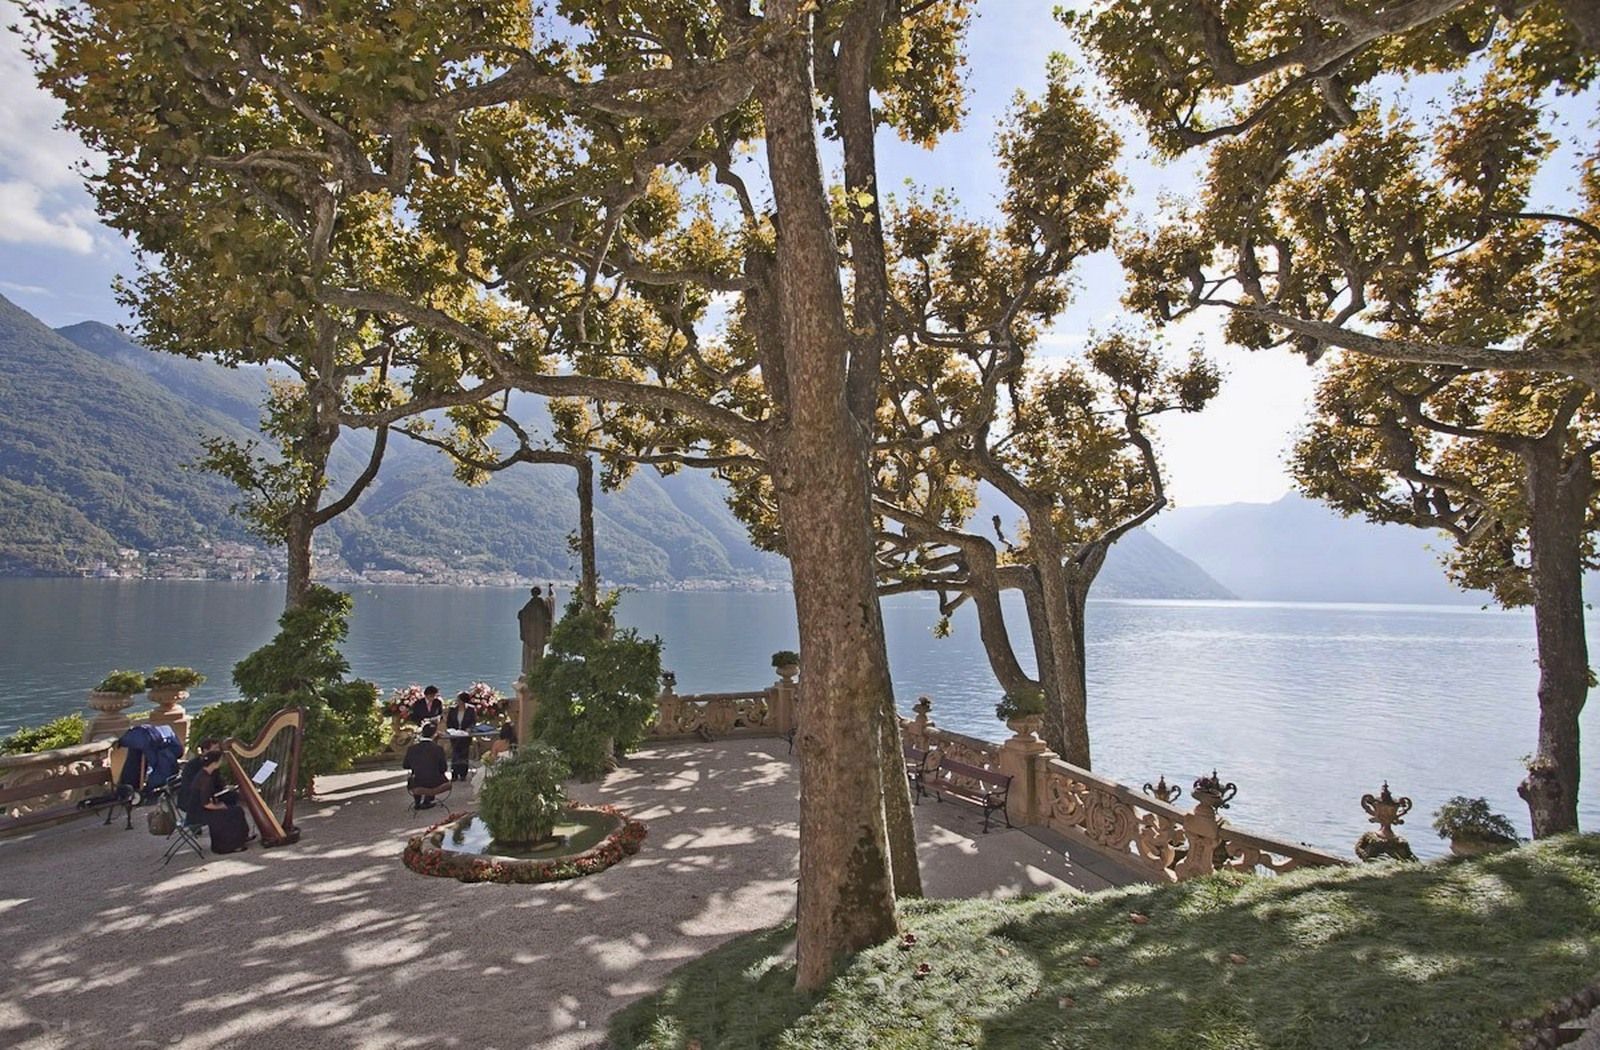 Lake Como Wedding Planner